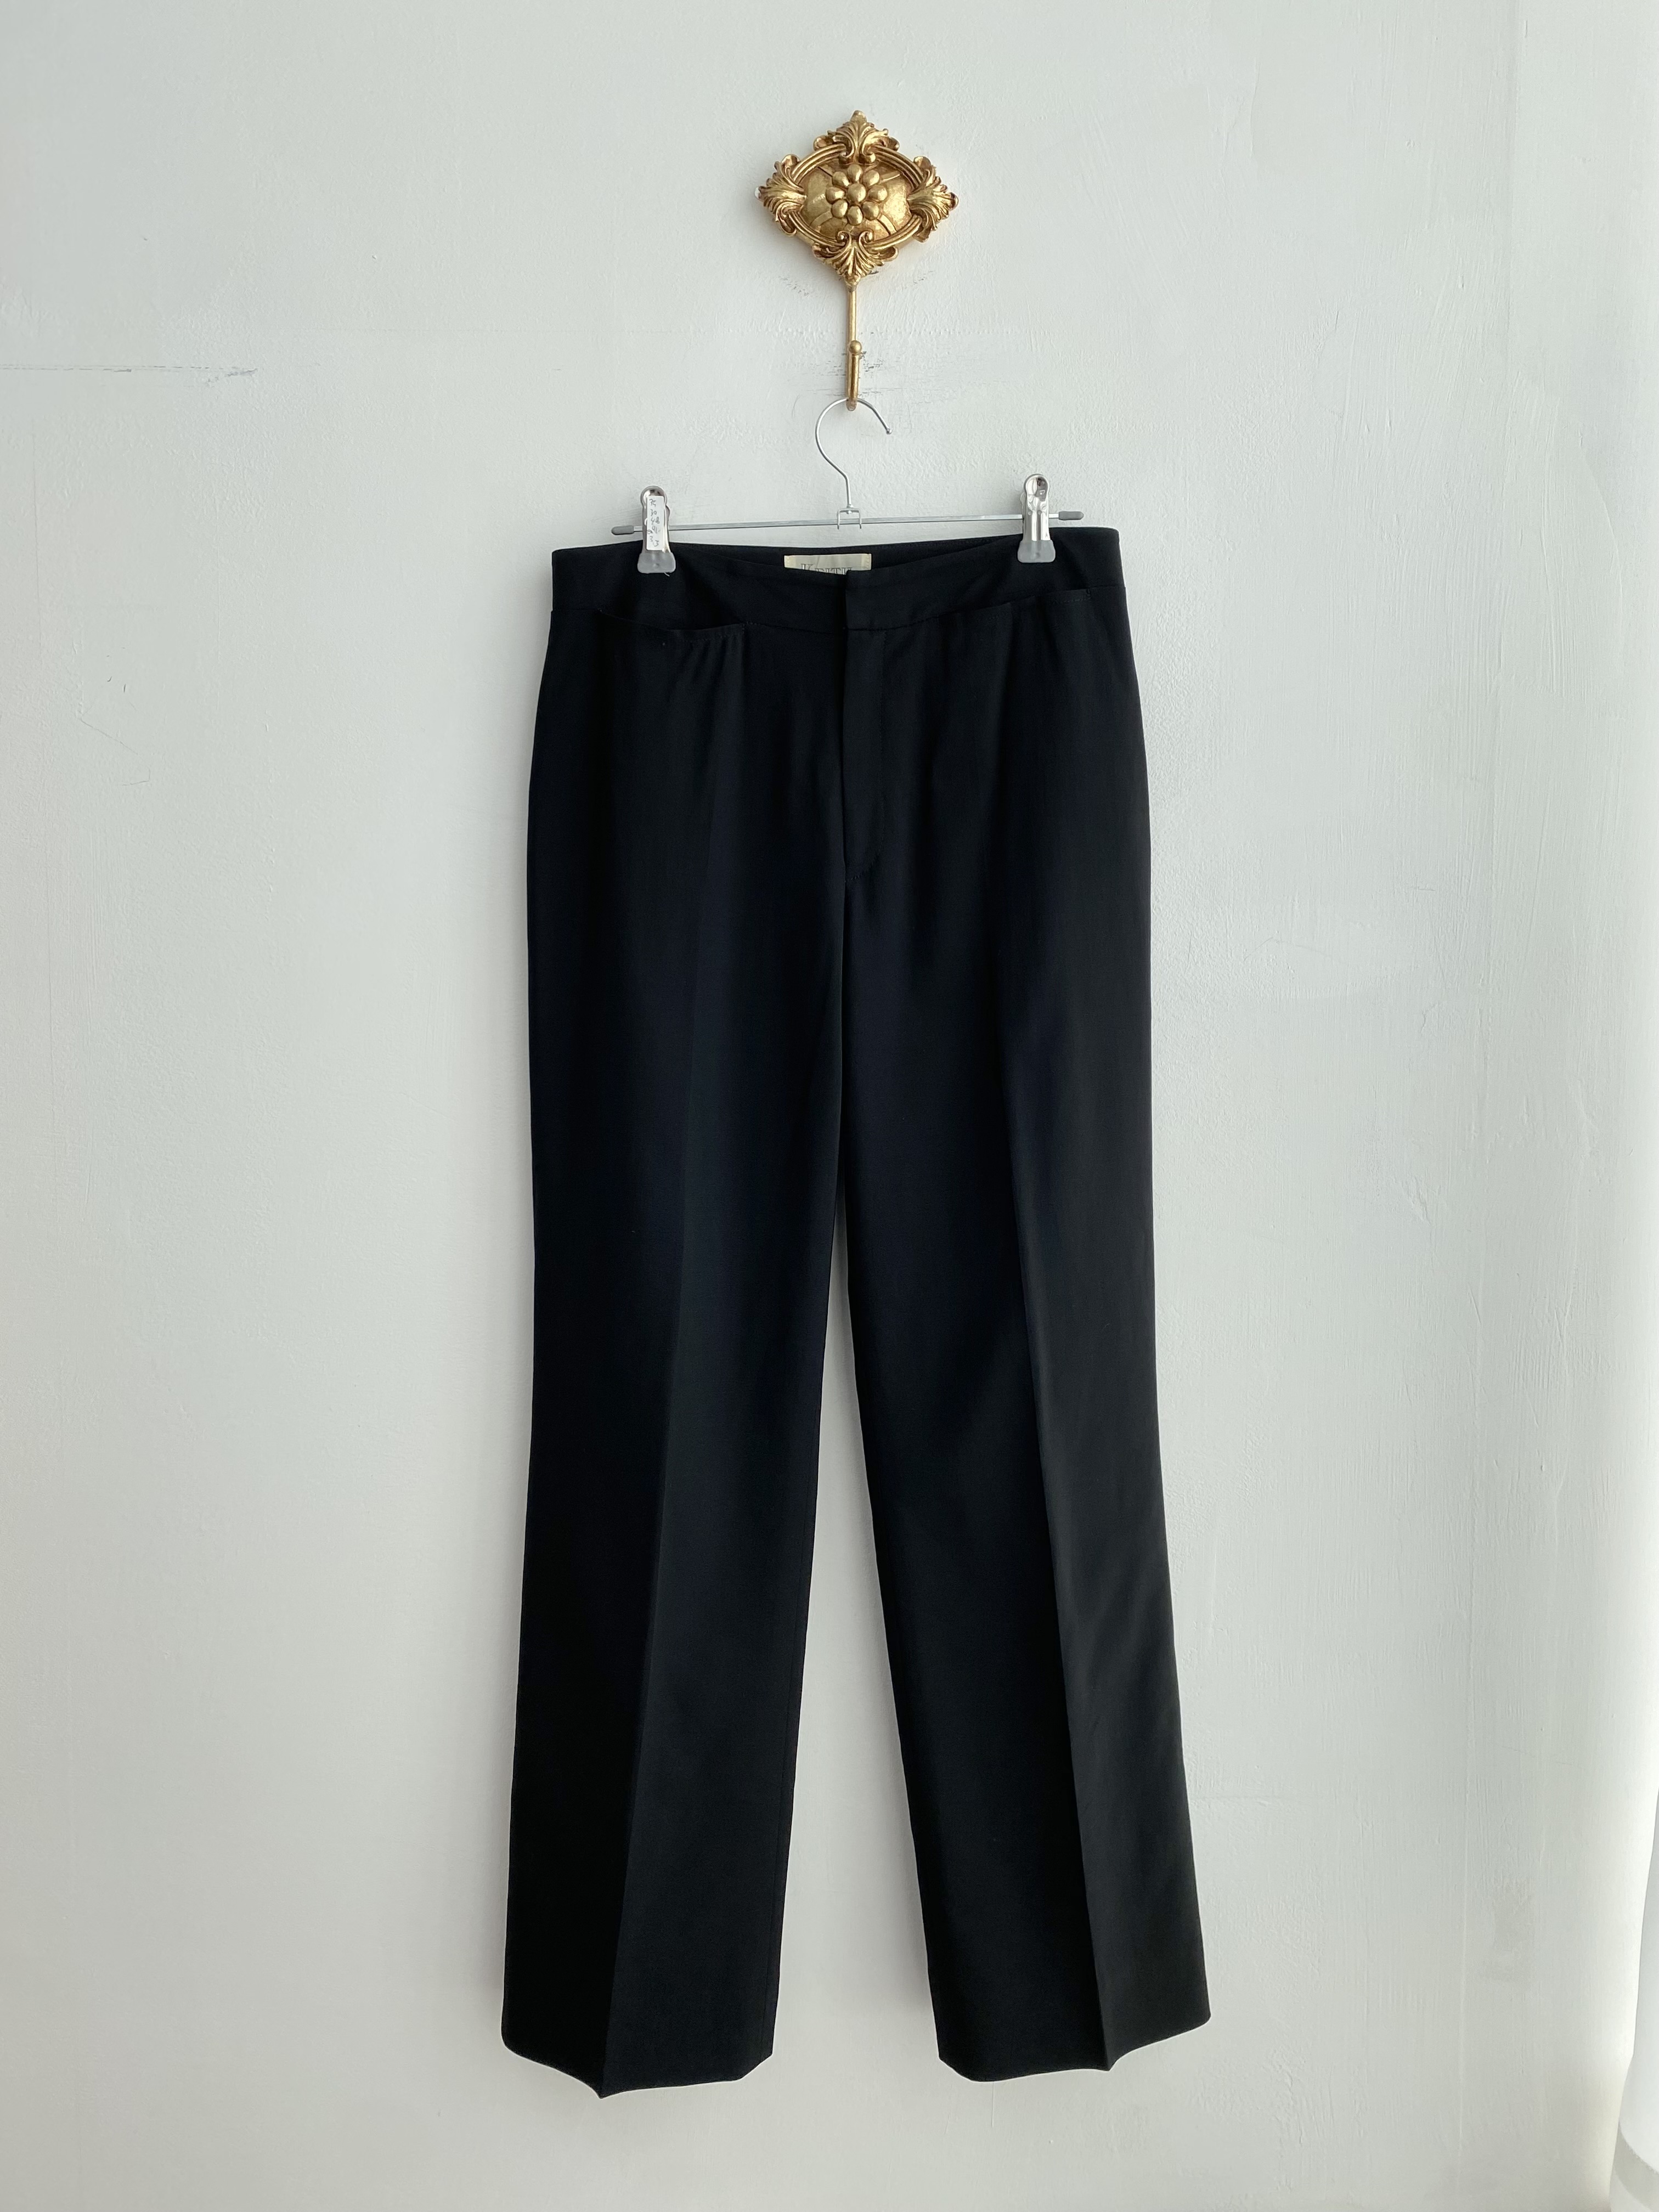 KEITH black simple pin-tuck pants